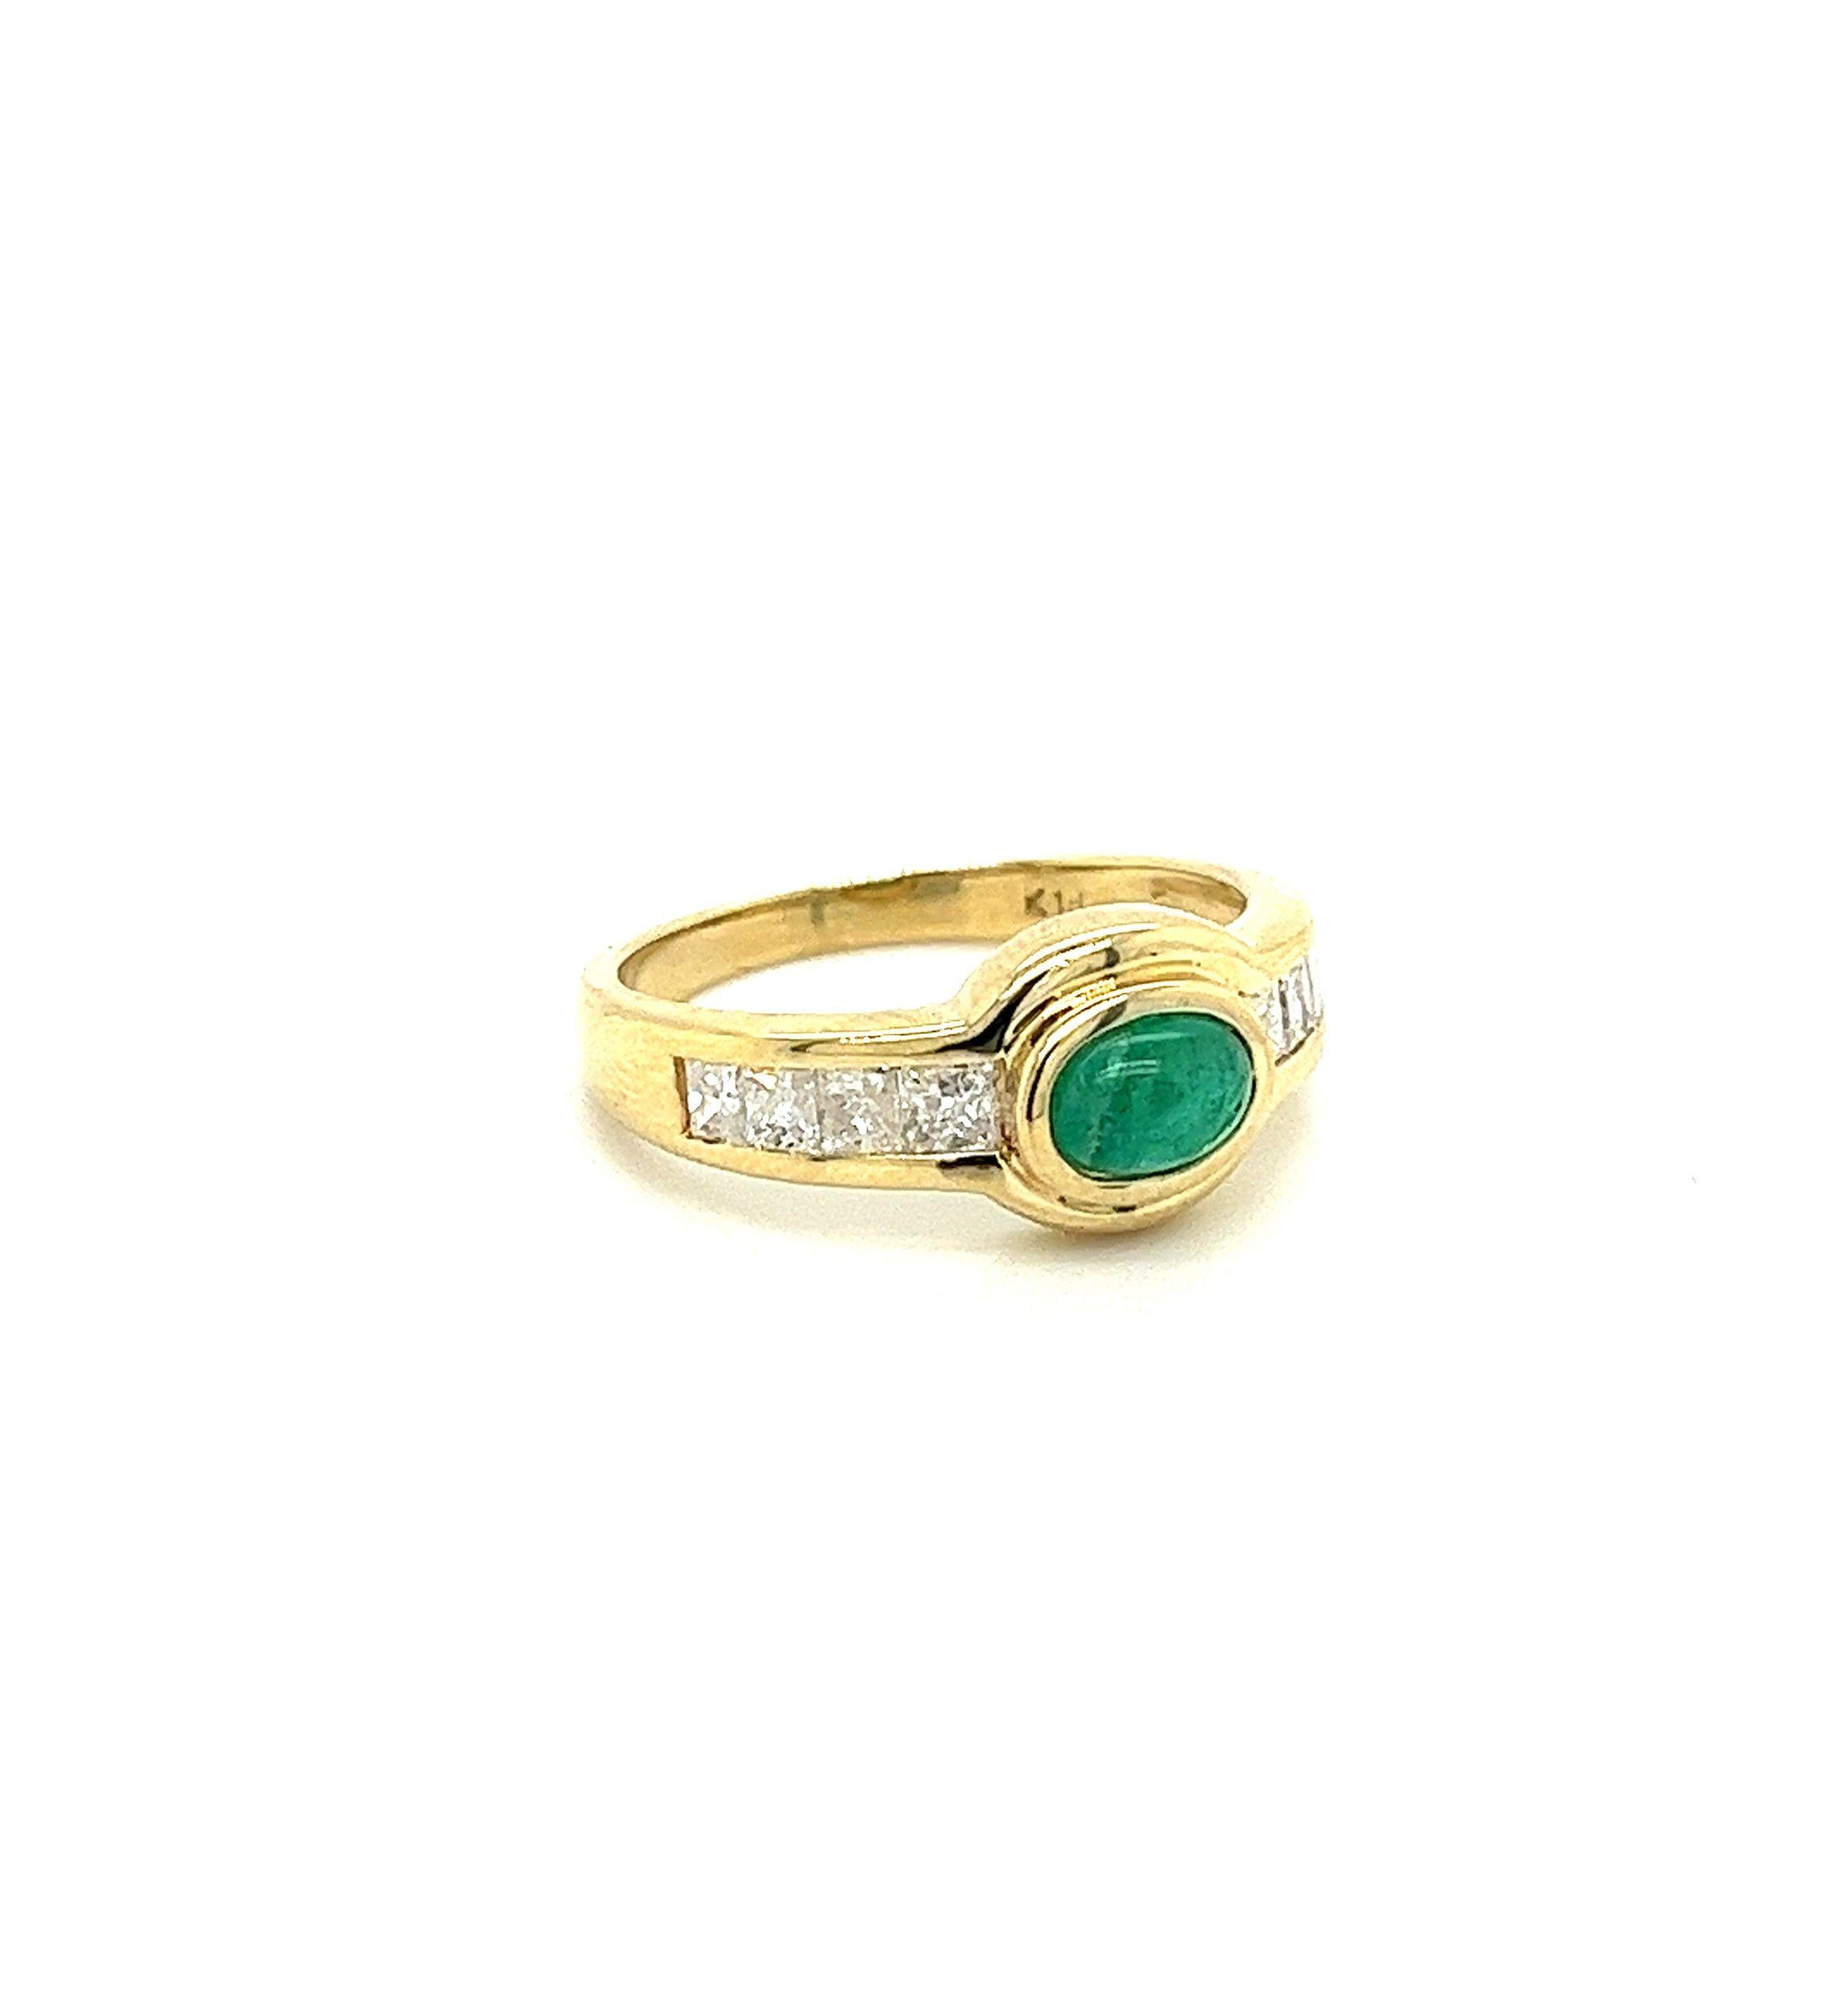 Natural Cabochon Emerald & Princess Cut Diamonds in 18K Gold Bezel Set Ring For Sale 1